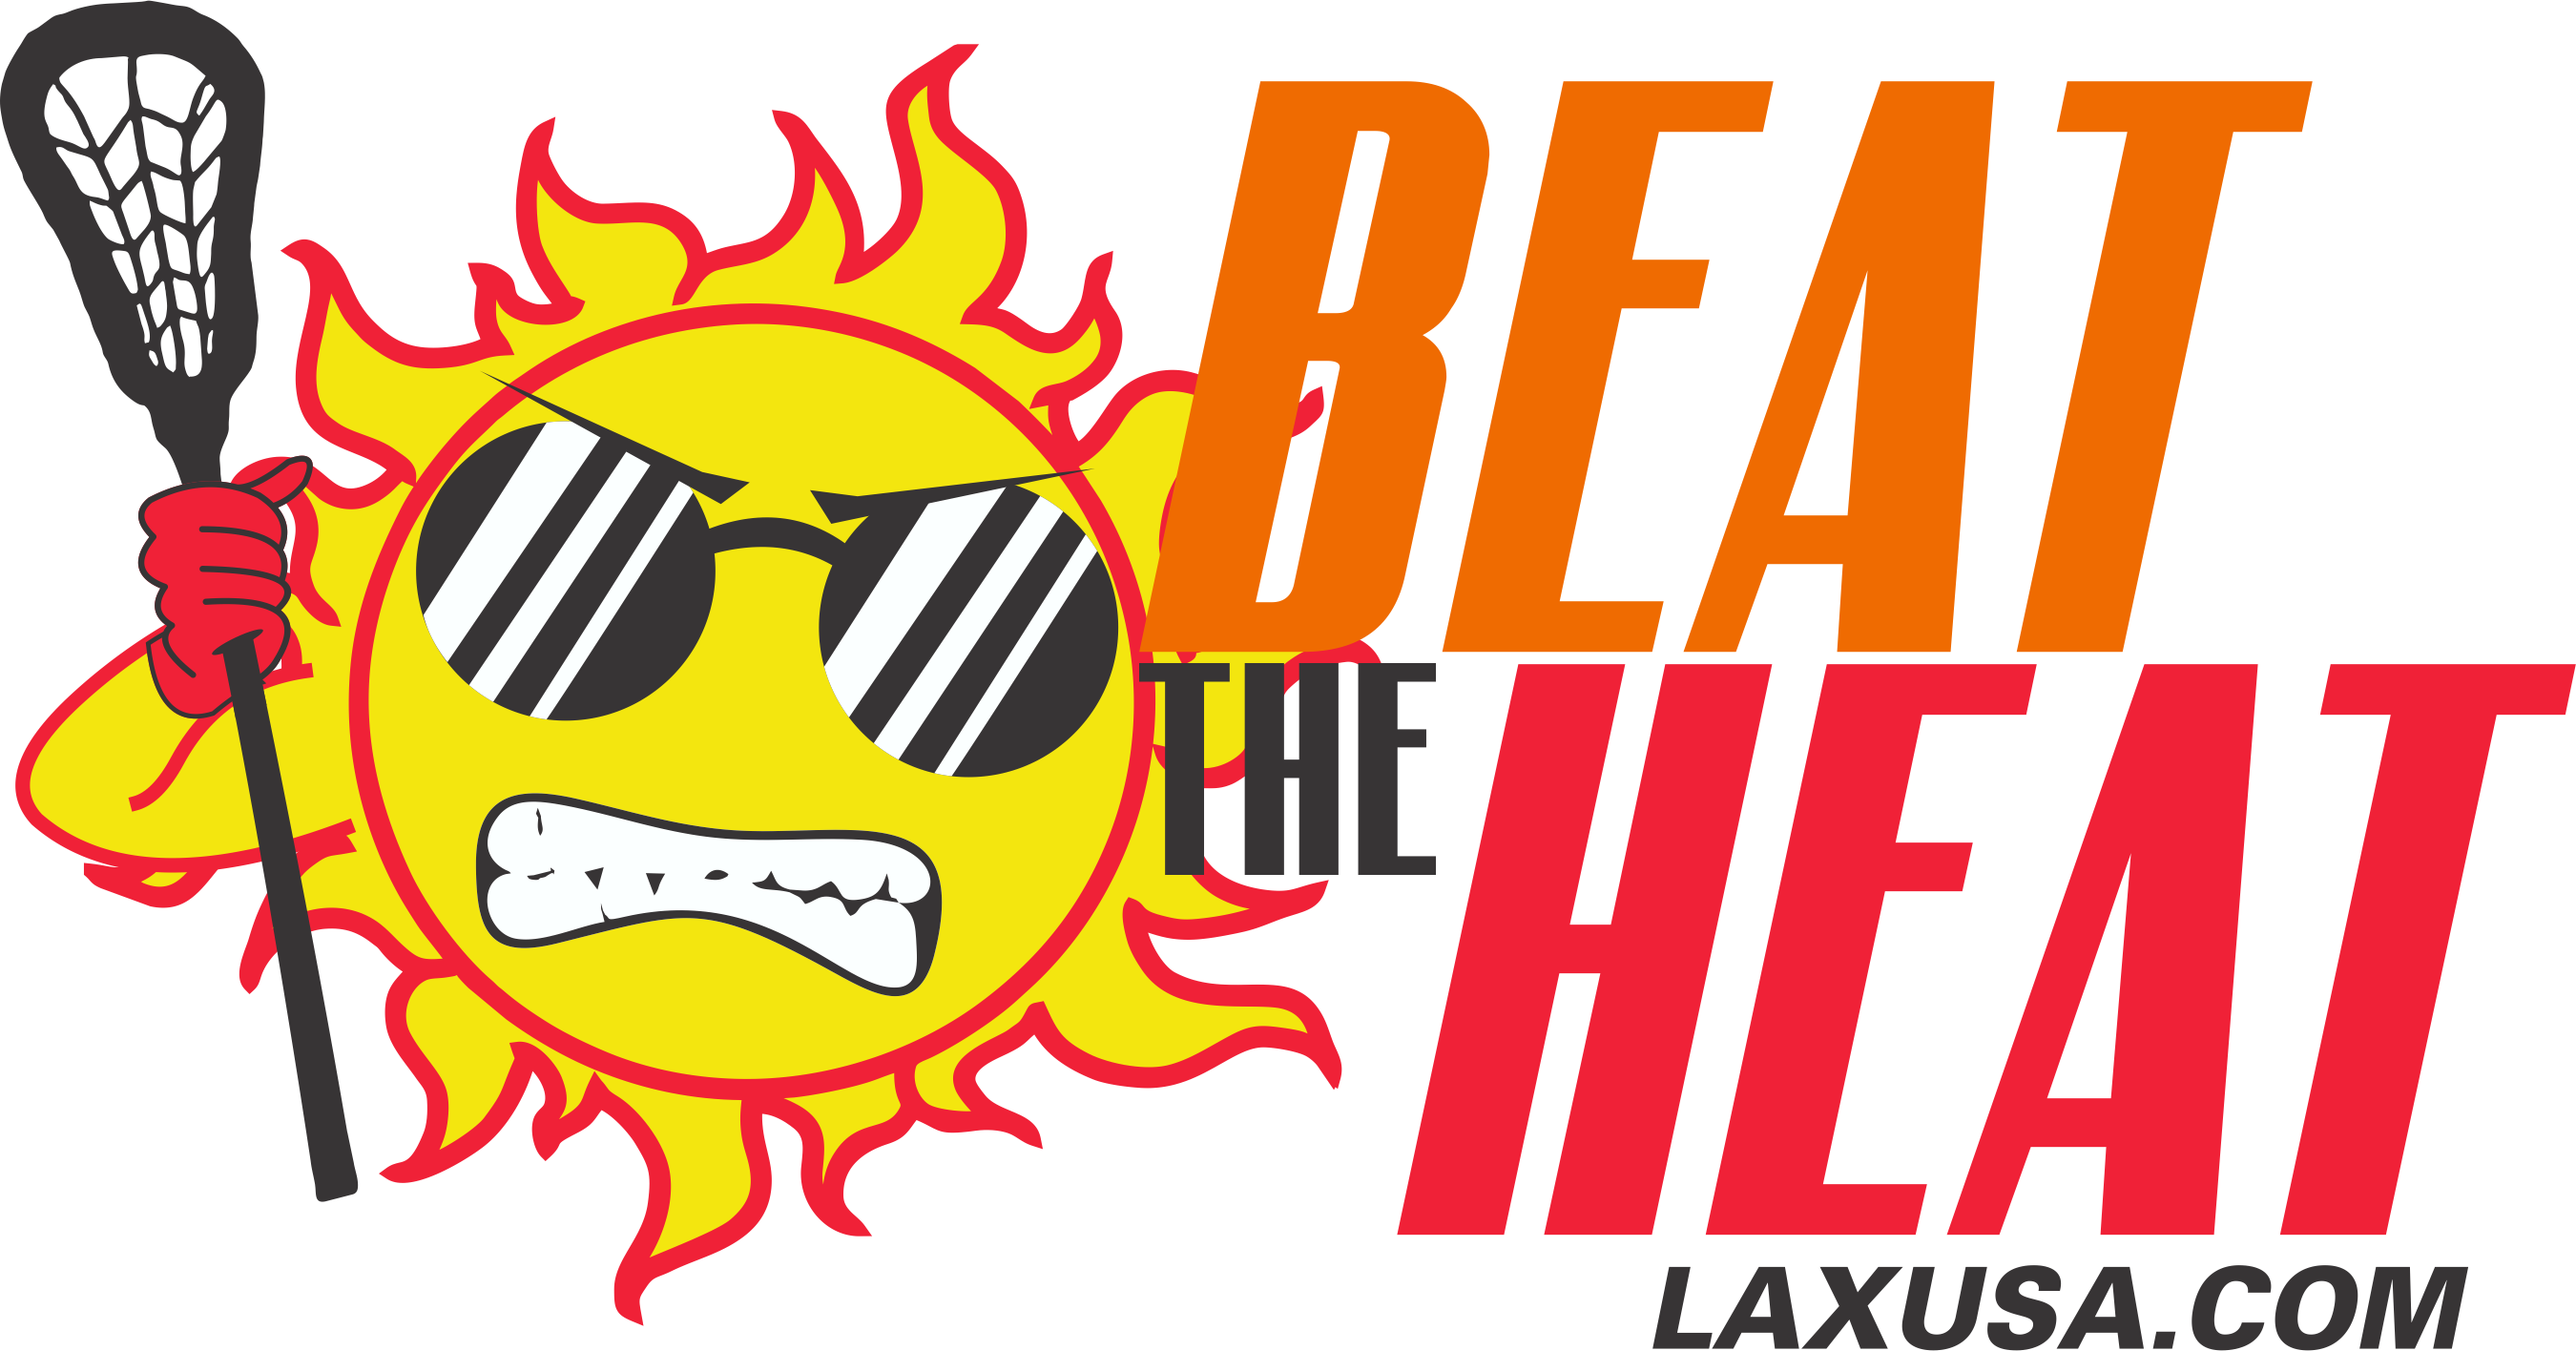 Heat. Beat the Heat солнце. Heat x Beat. Beat the Heat in seconds poster.